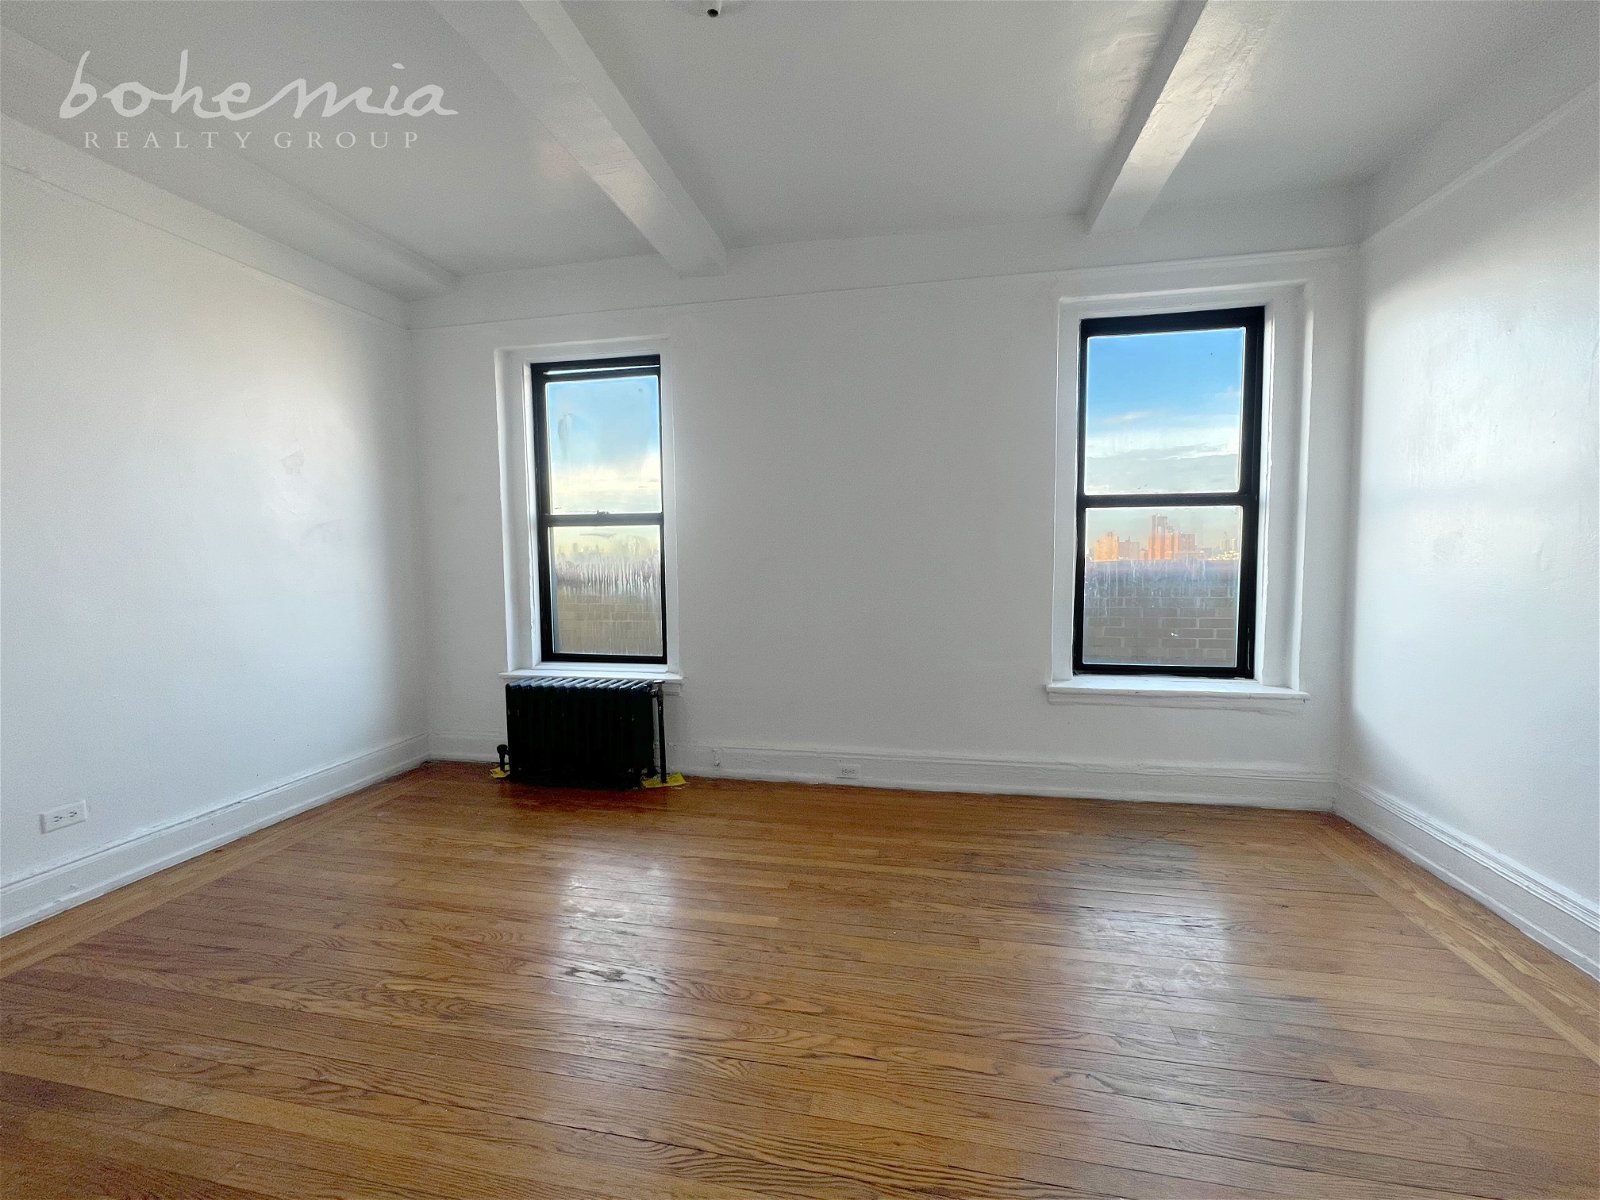 Real estate property located at 555 Edgecombe #15-F, New York, New York City, NY